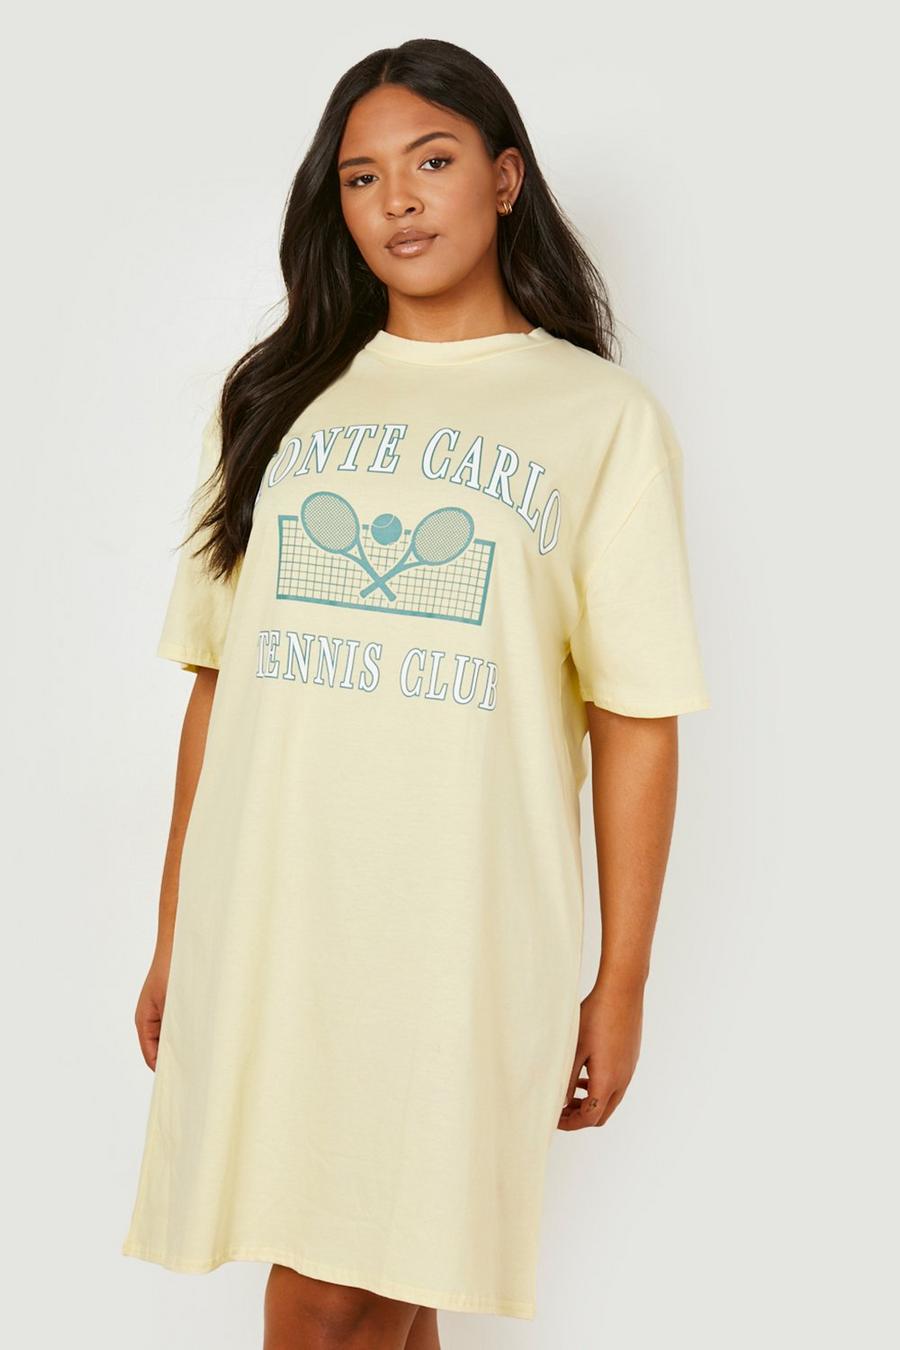 Vestito T-shirt Plus Size con slogan Tennis Club, Yellow giallo